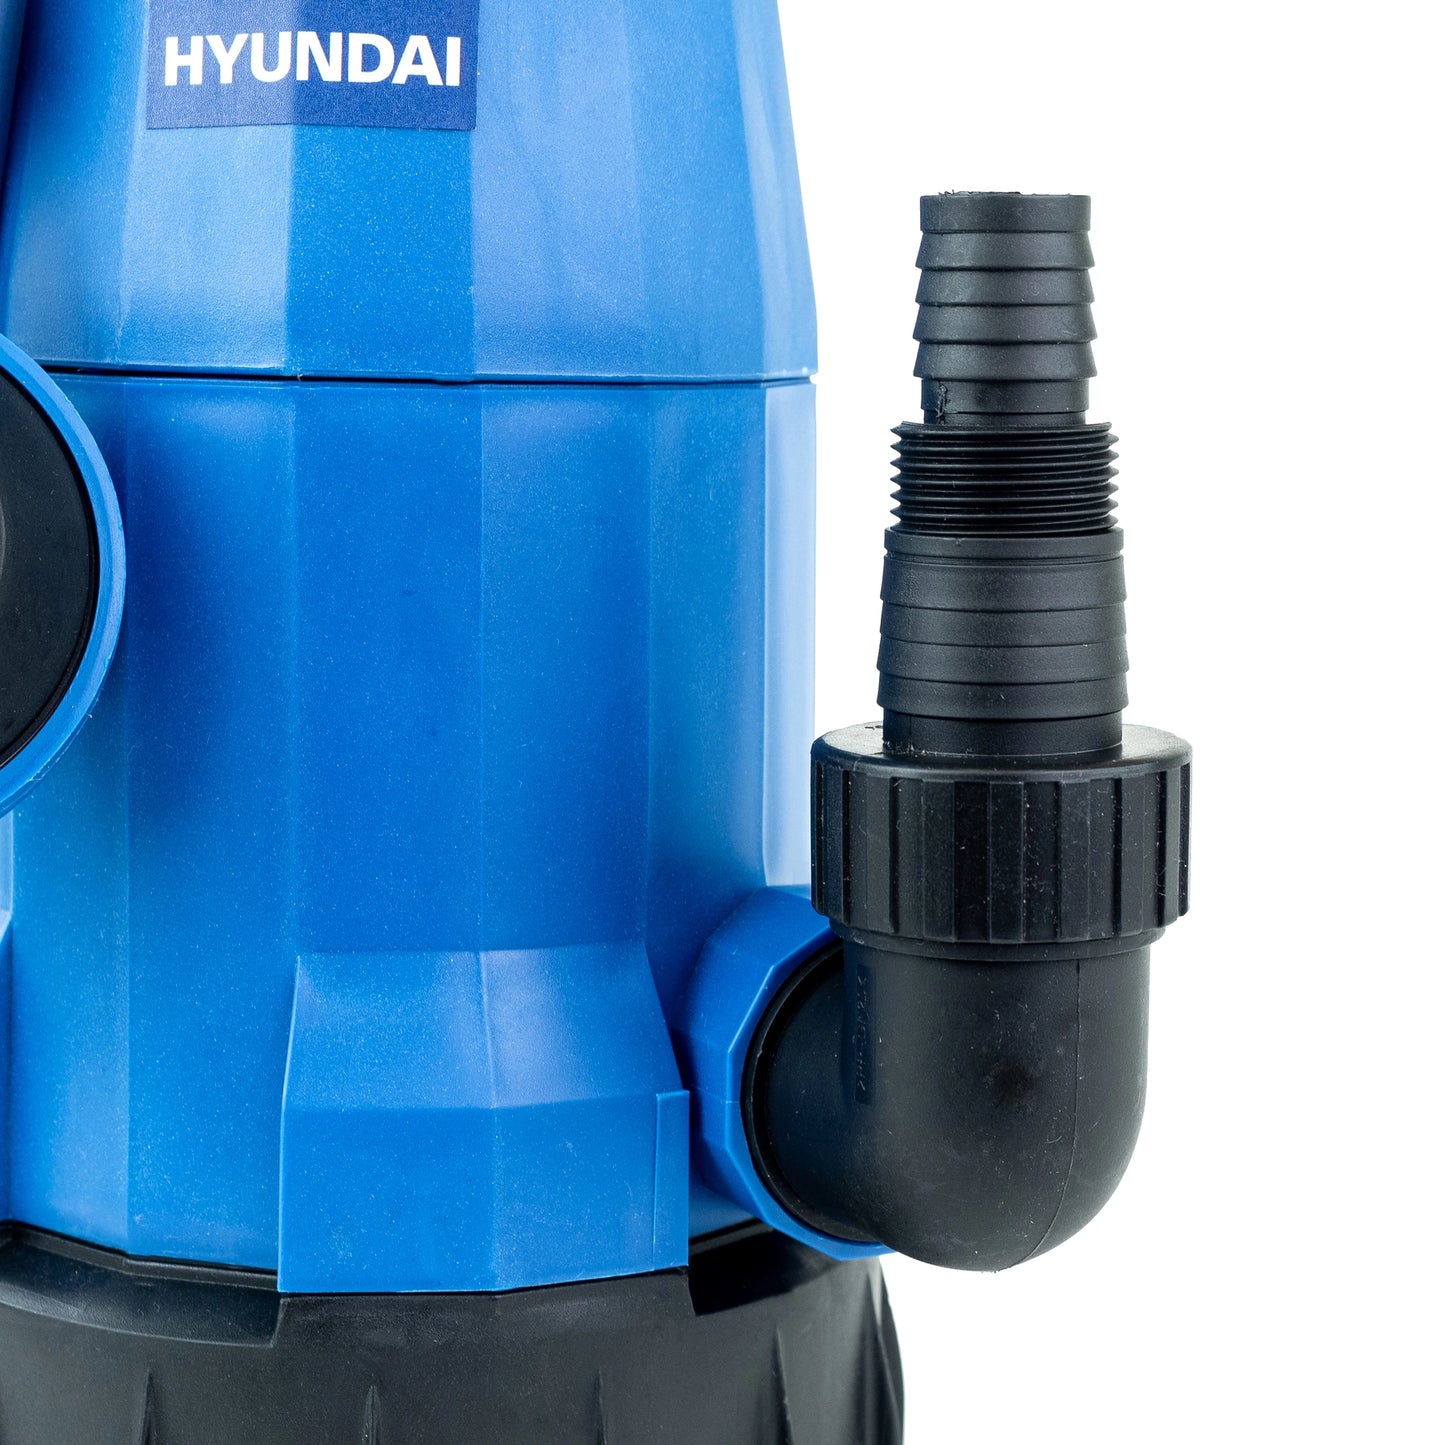 Hyundai HYSP1100CD Electric Clean & Dirty Water Submersible Pump